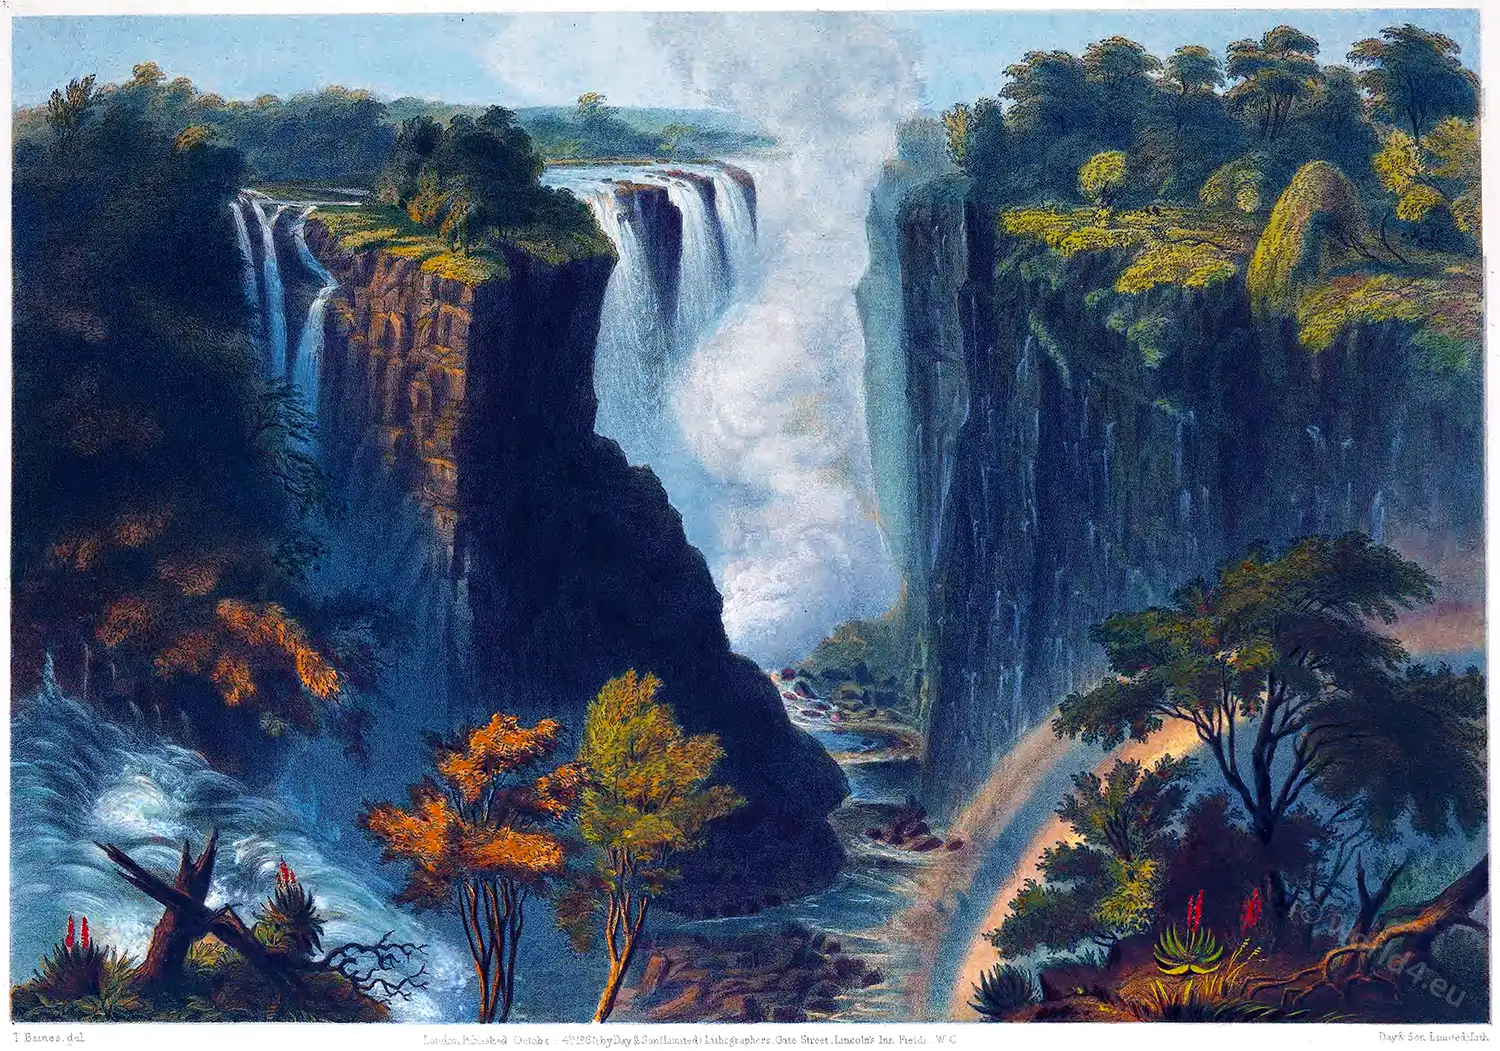 Thomas Baines, Chasm, Victoria Falls, Zambesi River, Africa,